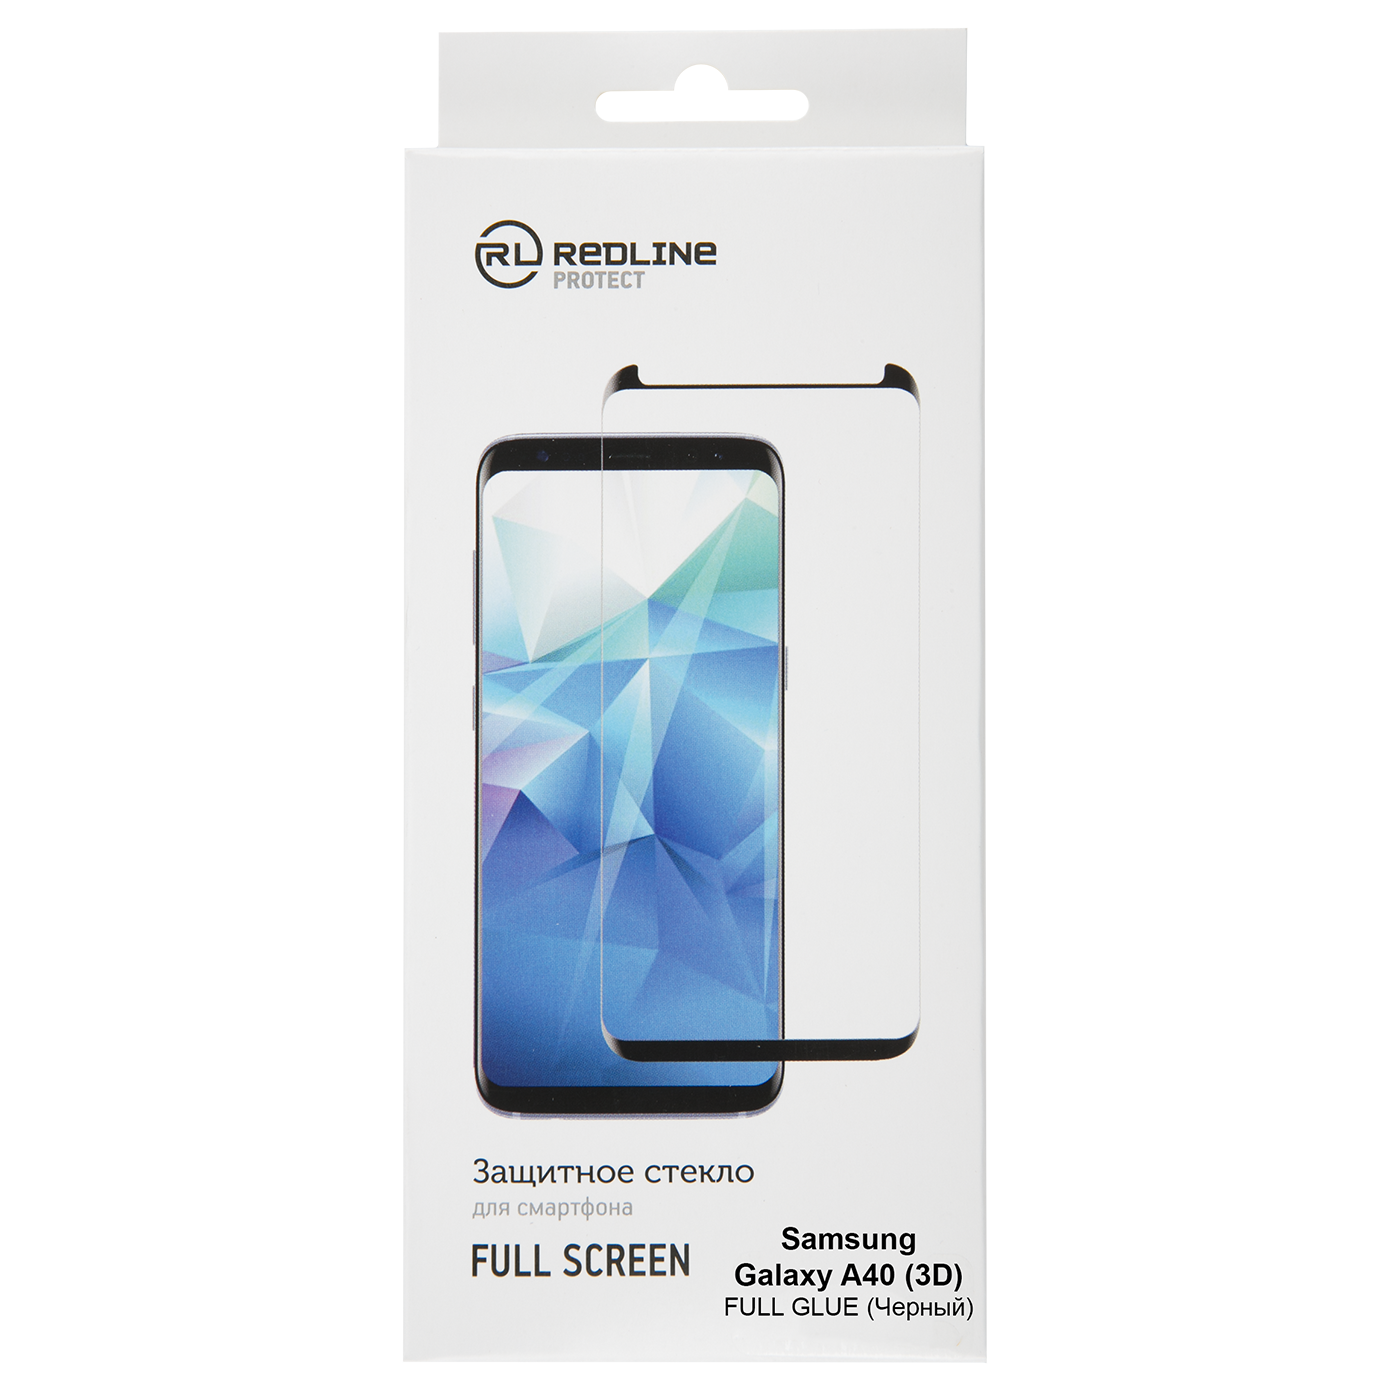 Защитный экран Samsung Galaxy A40 Full Screen (3D) tempered glass FULL GLUE